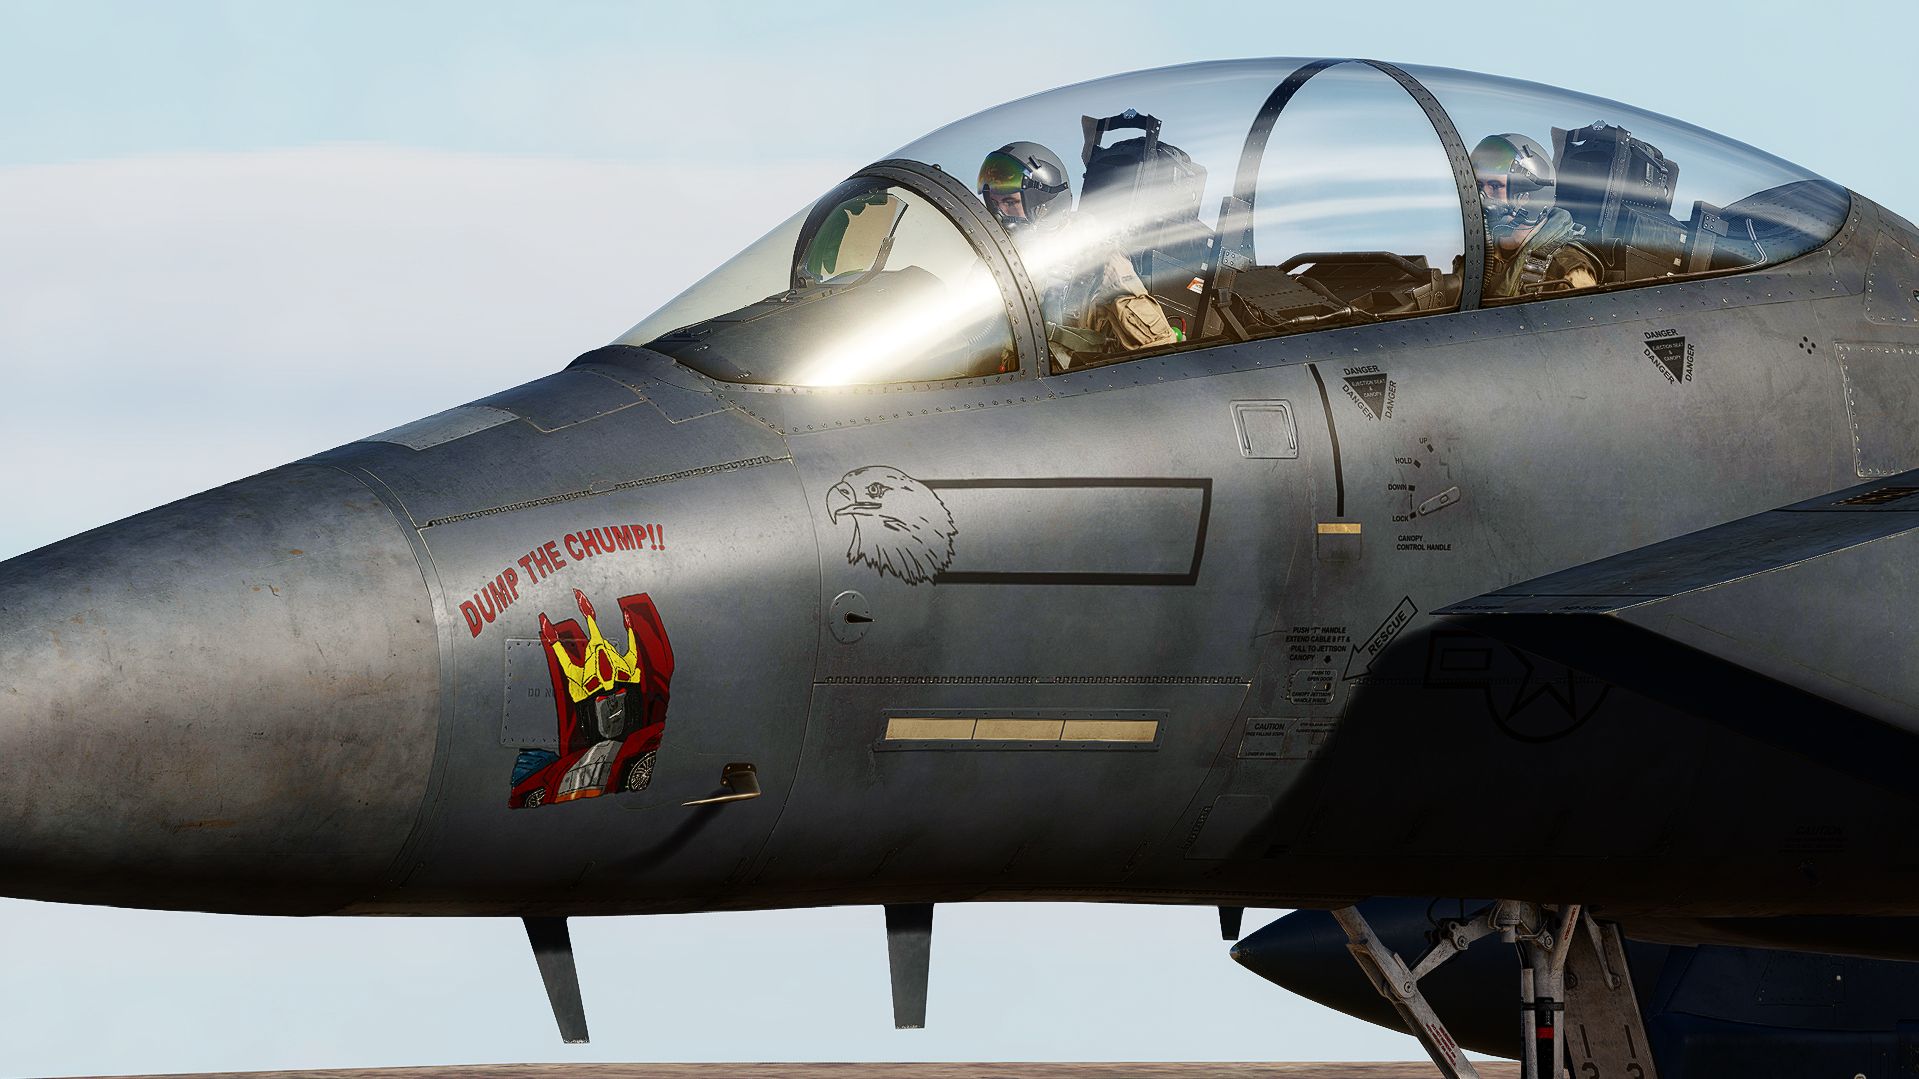 F-15E strike eagle LN 91-309 "Starscream" (REWORKED)